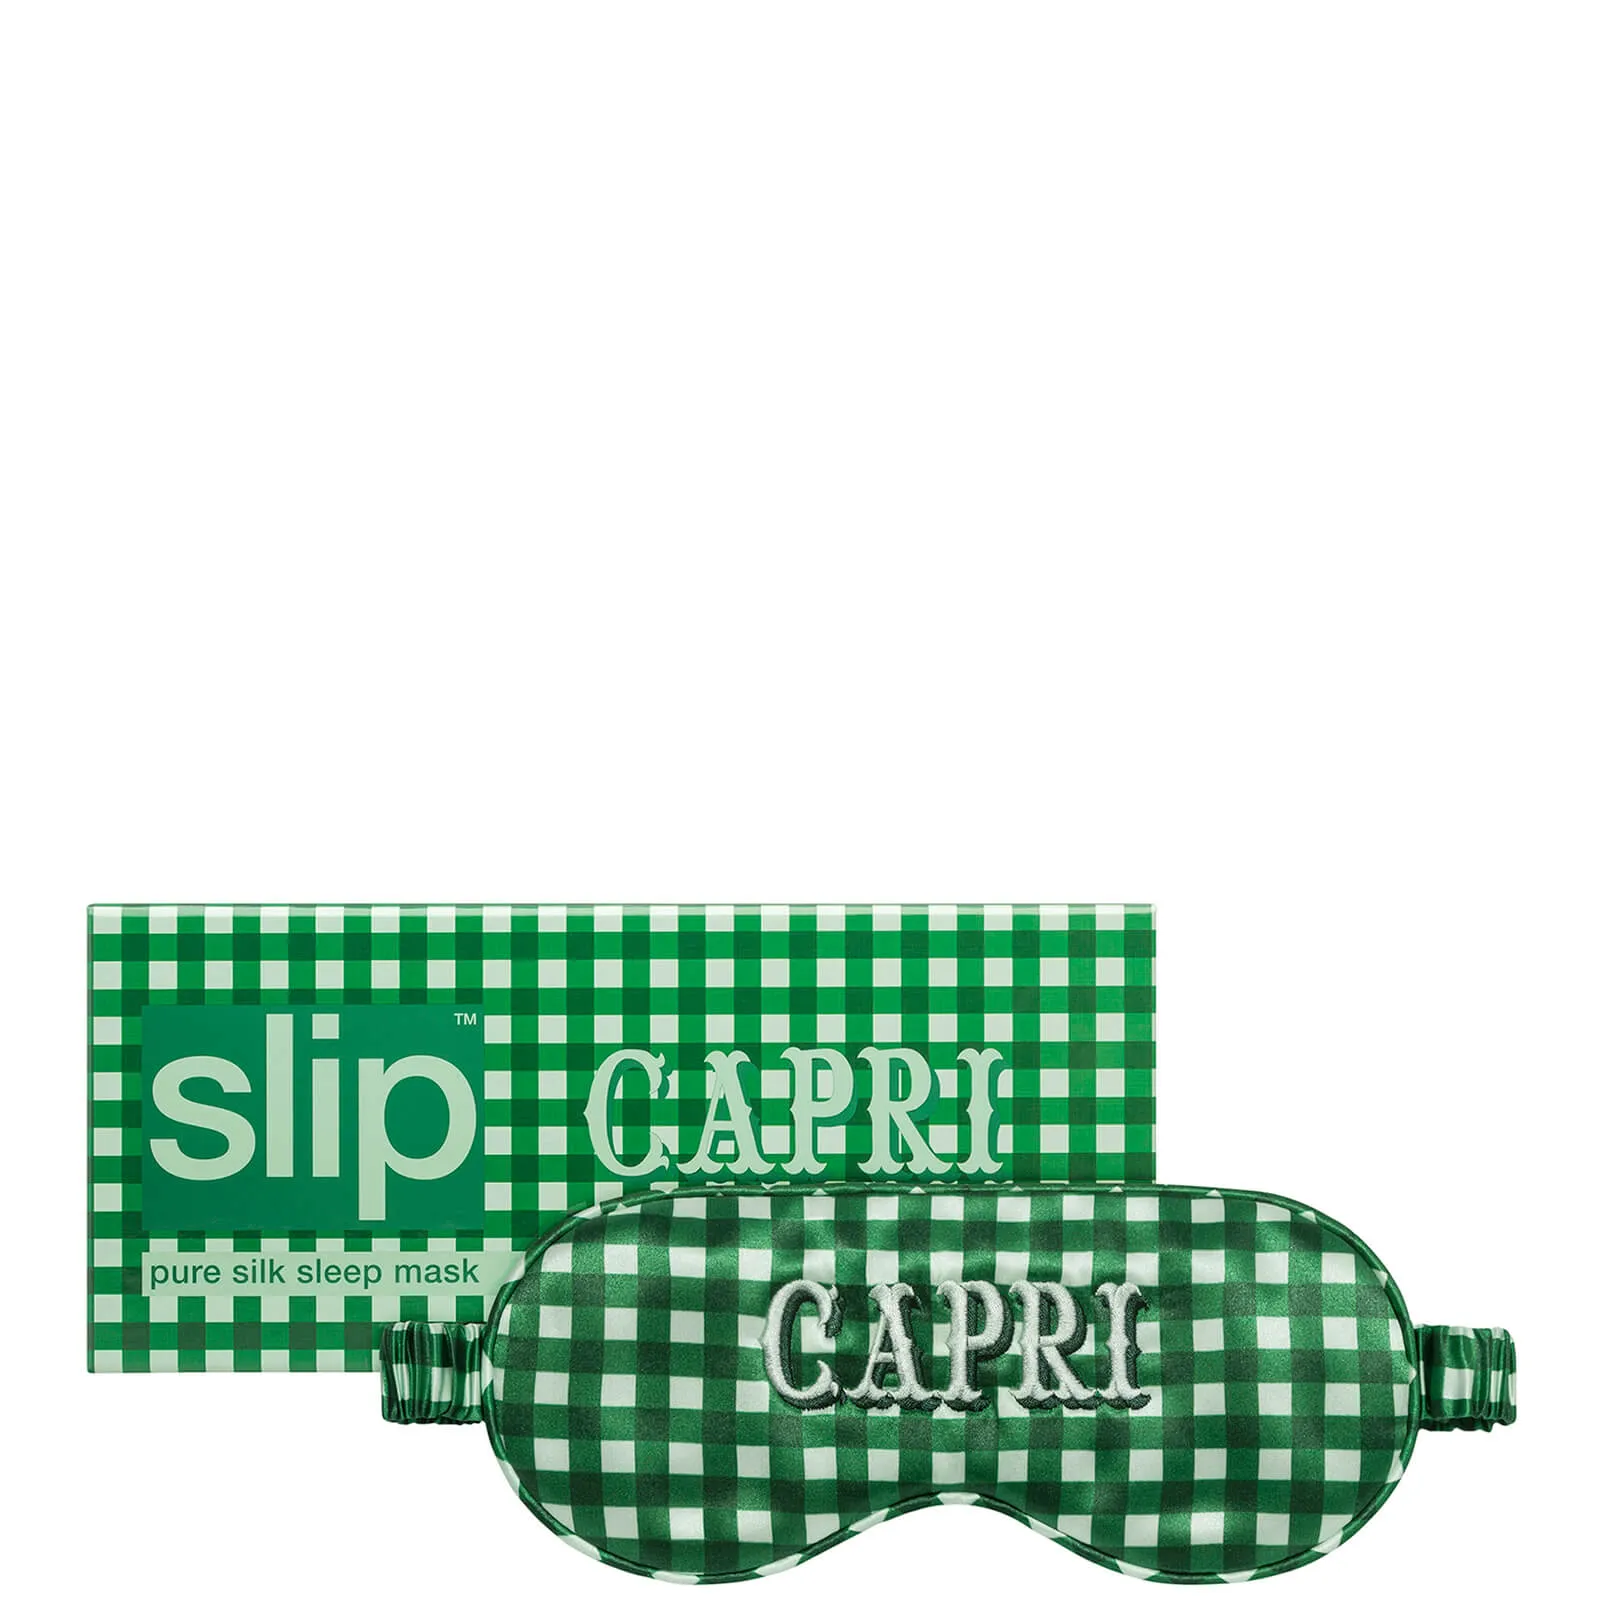  Pure Silk Sleep Mask - Capri